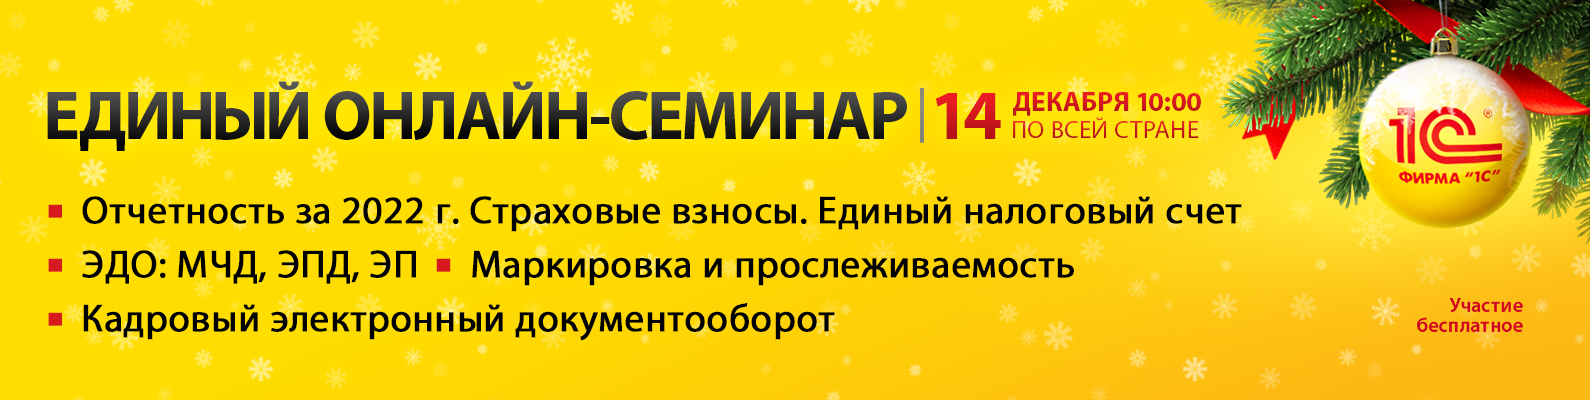 Единый онлайн-семинар «1С» 14 декабря 2022 года